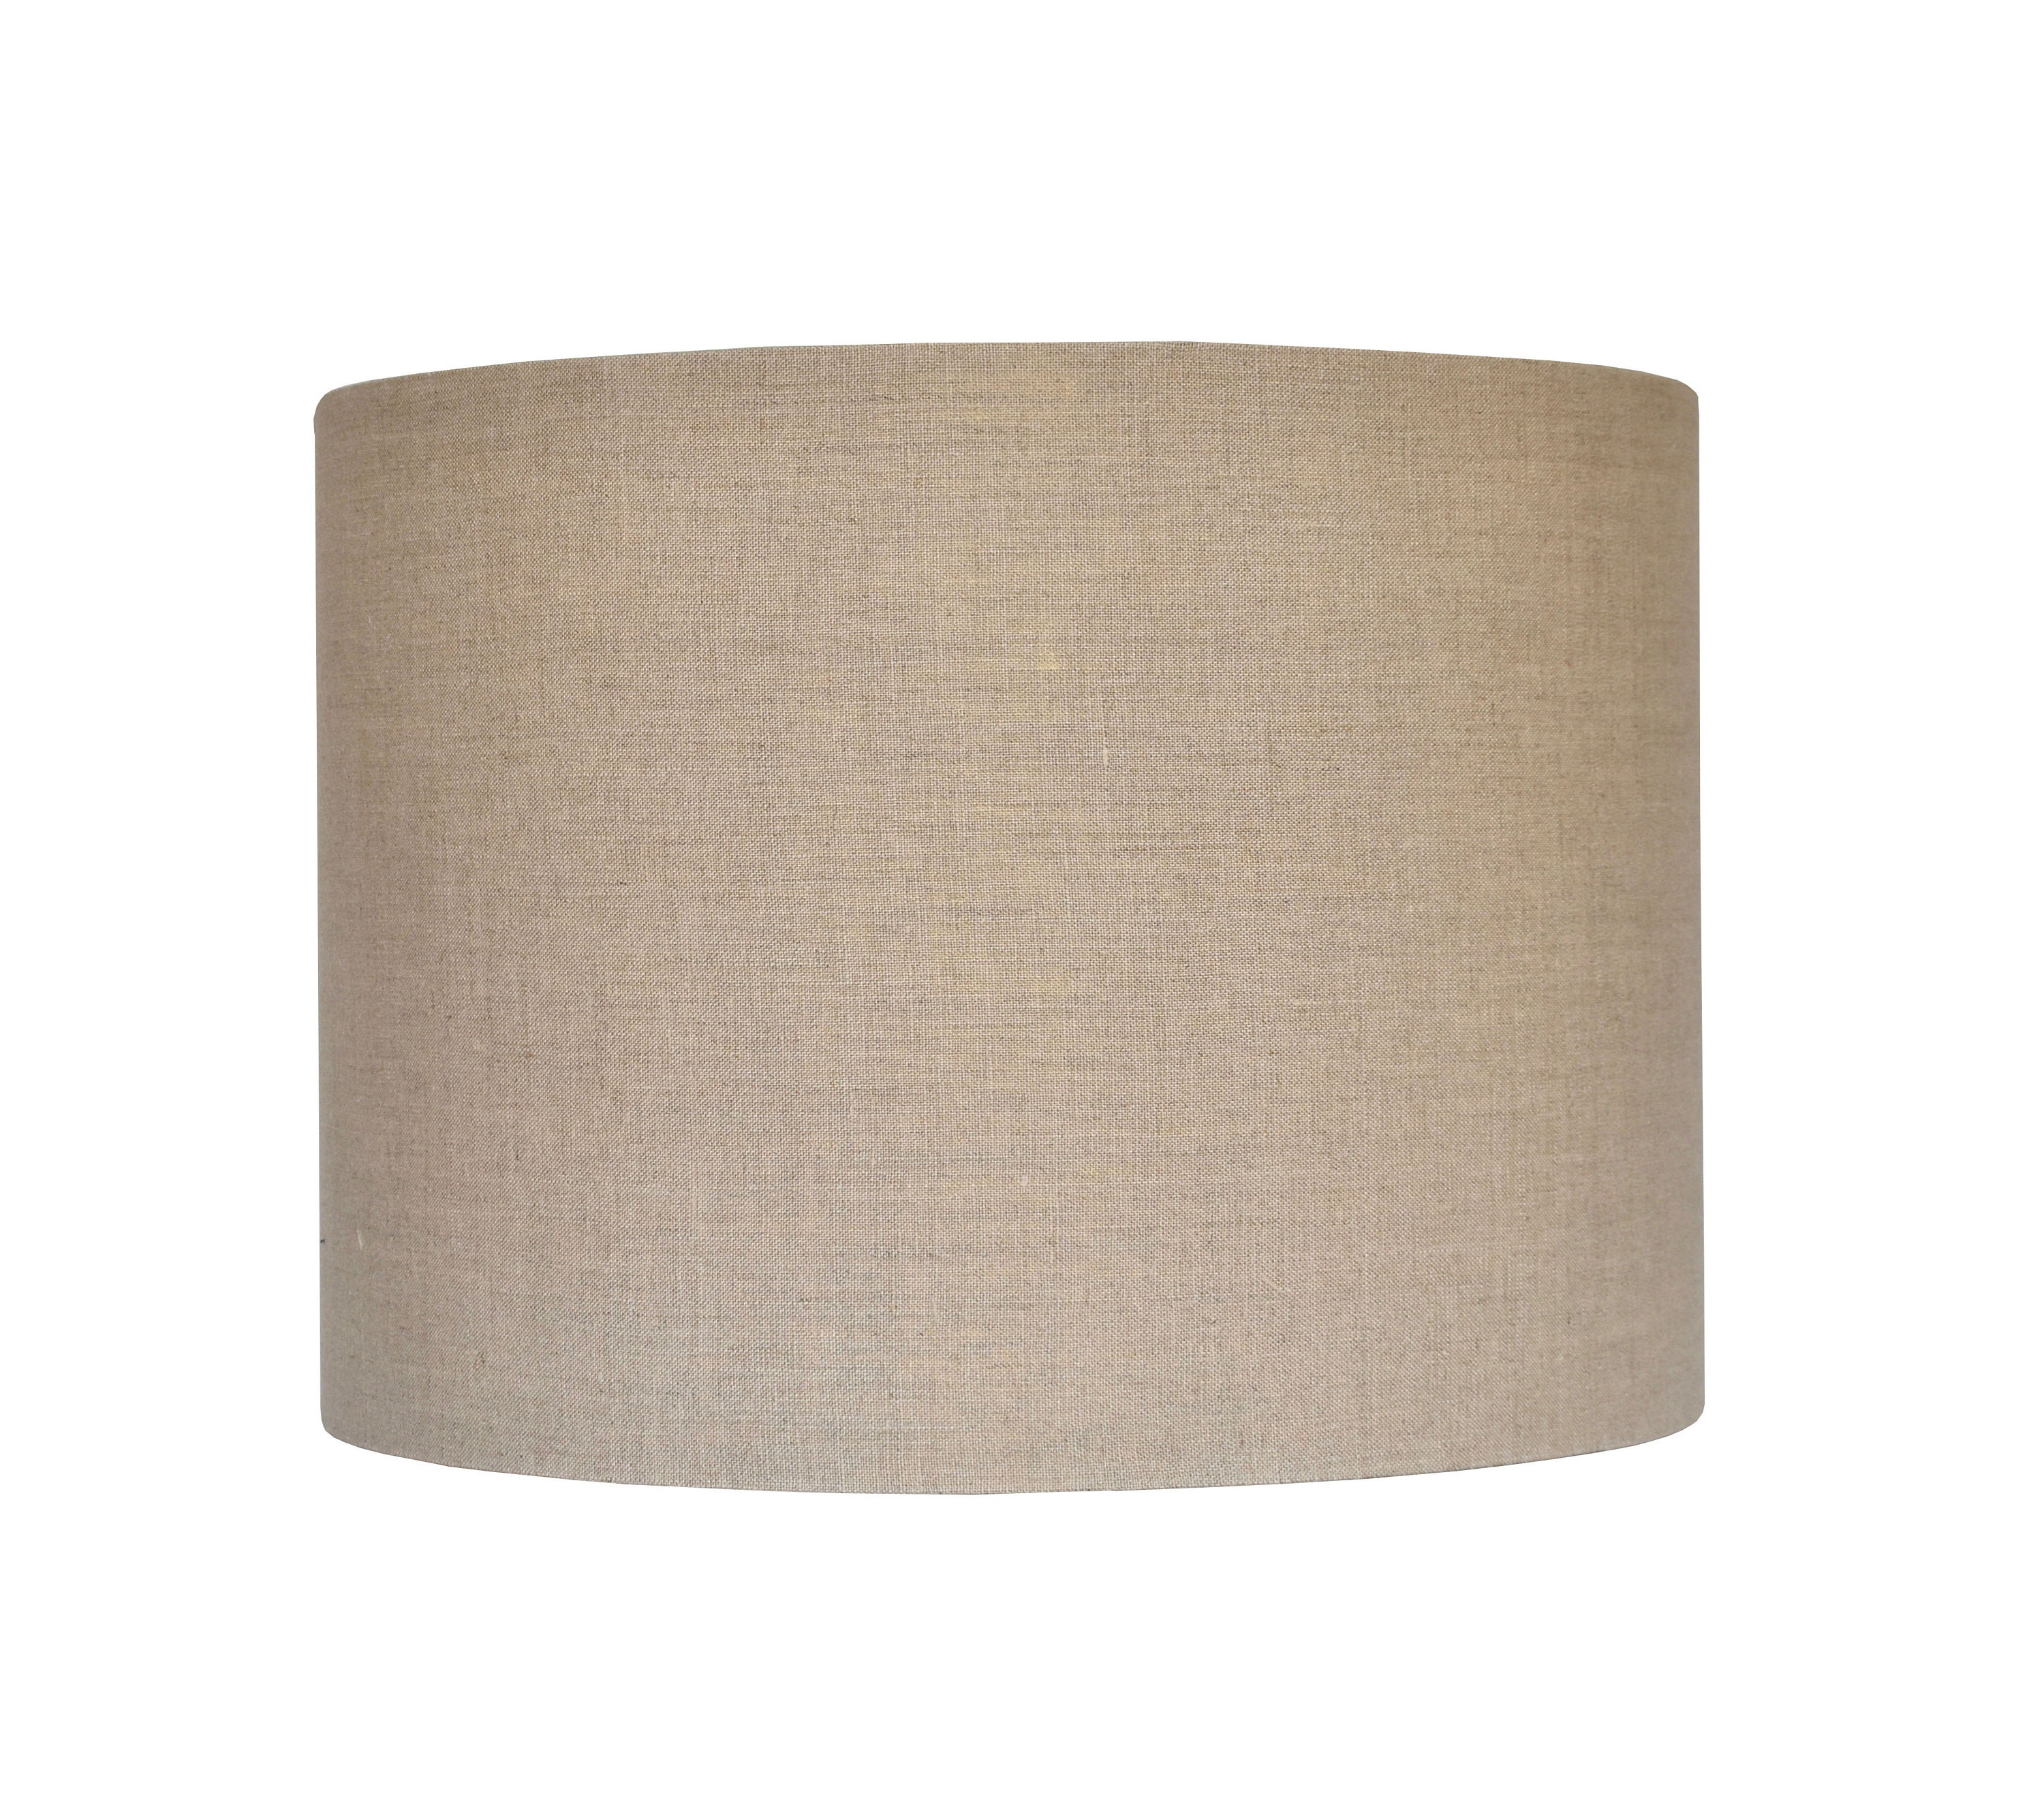 Natural Linen Lamp Shade Custom Made-to-order-home | Etsy